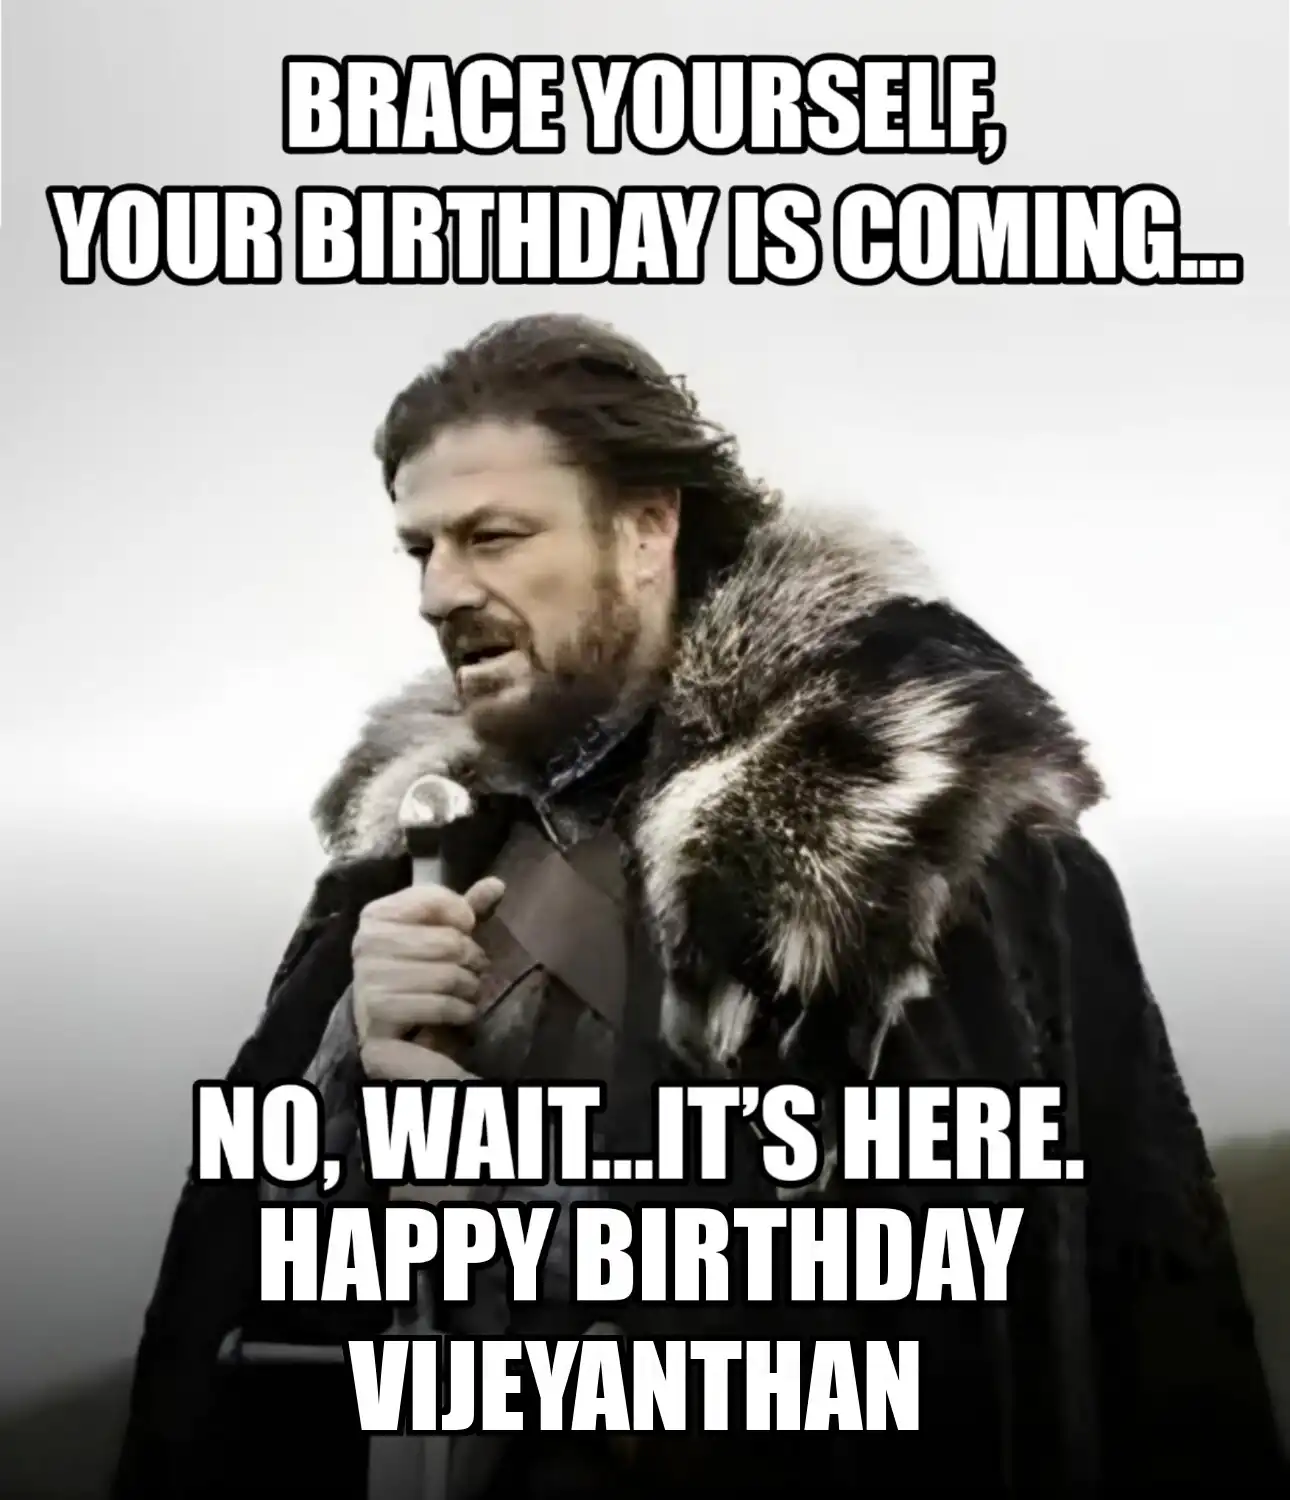 Happy Birthday Vijeyanthan Brace Yourself Your Birthday Is Coming Meme